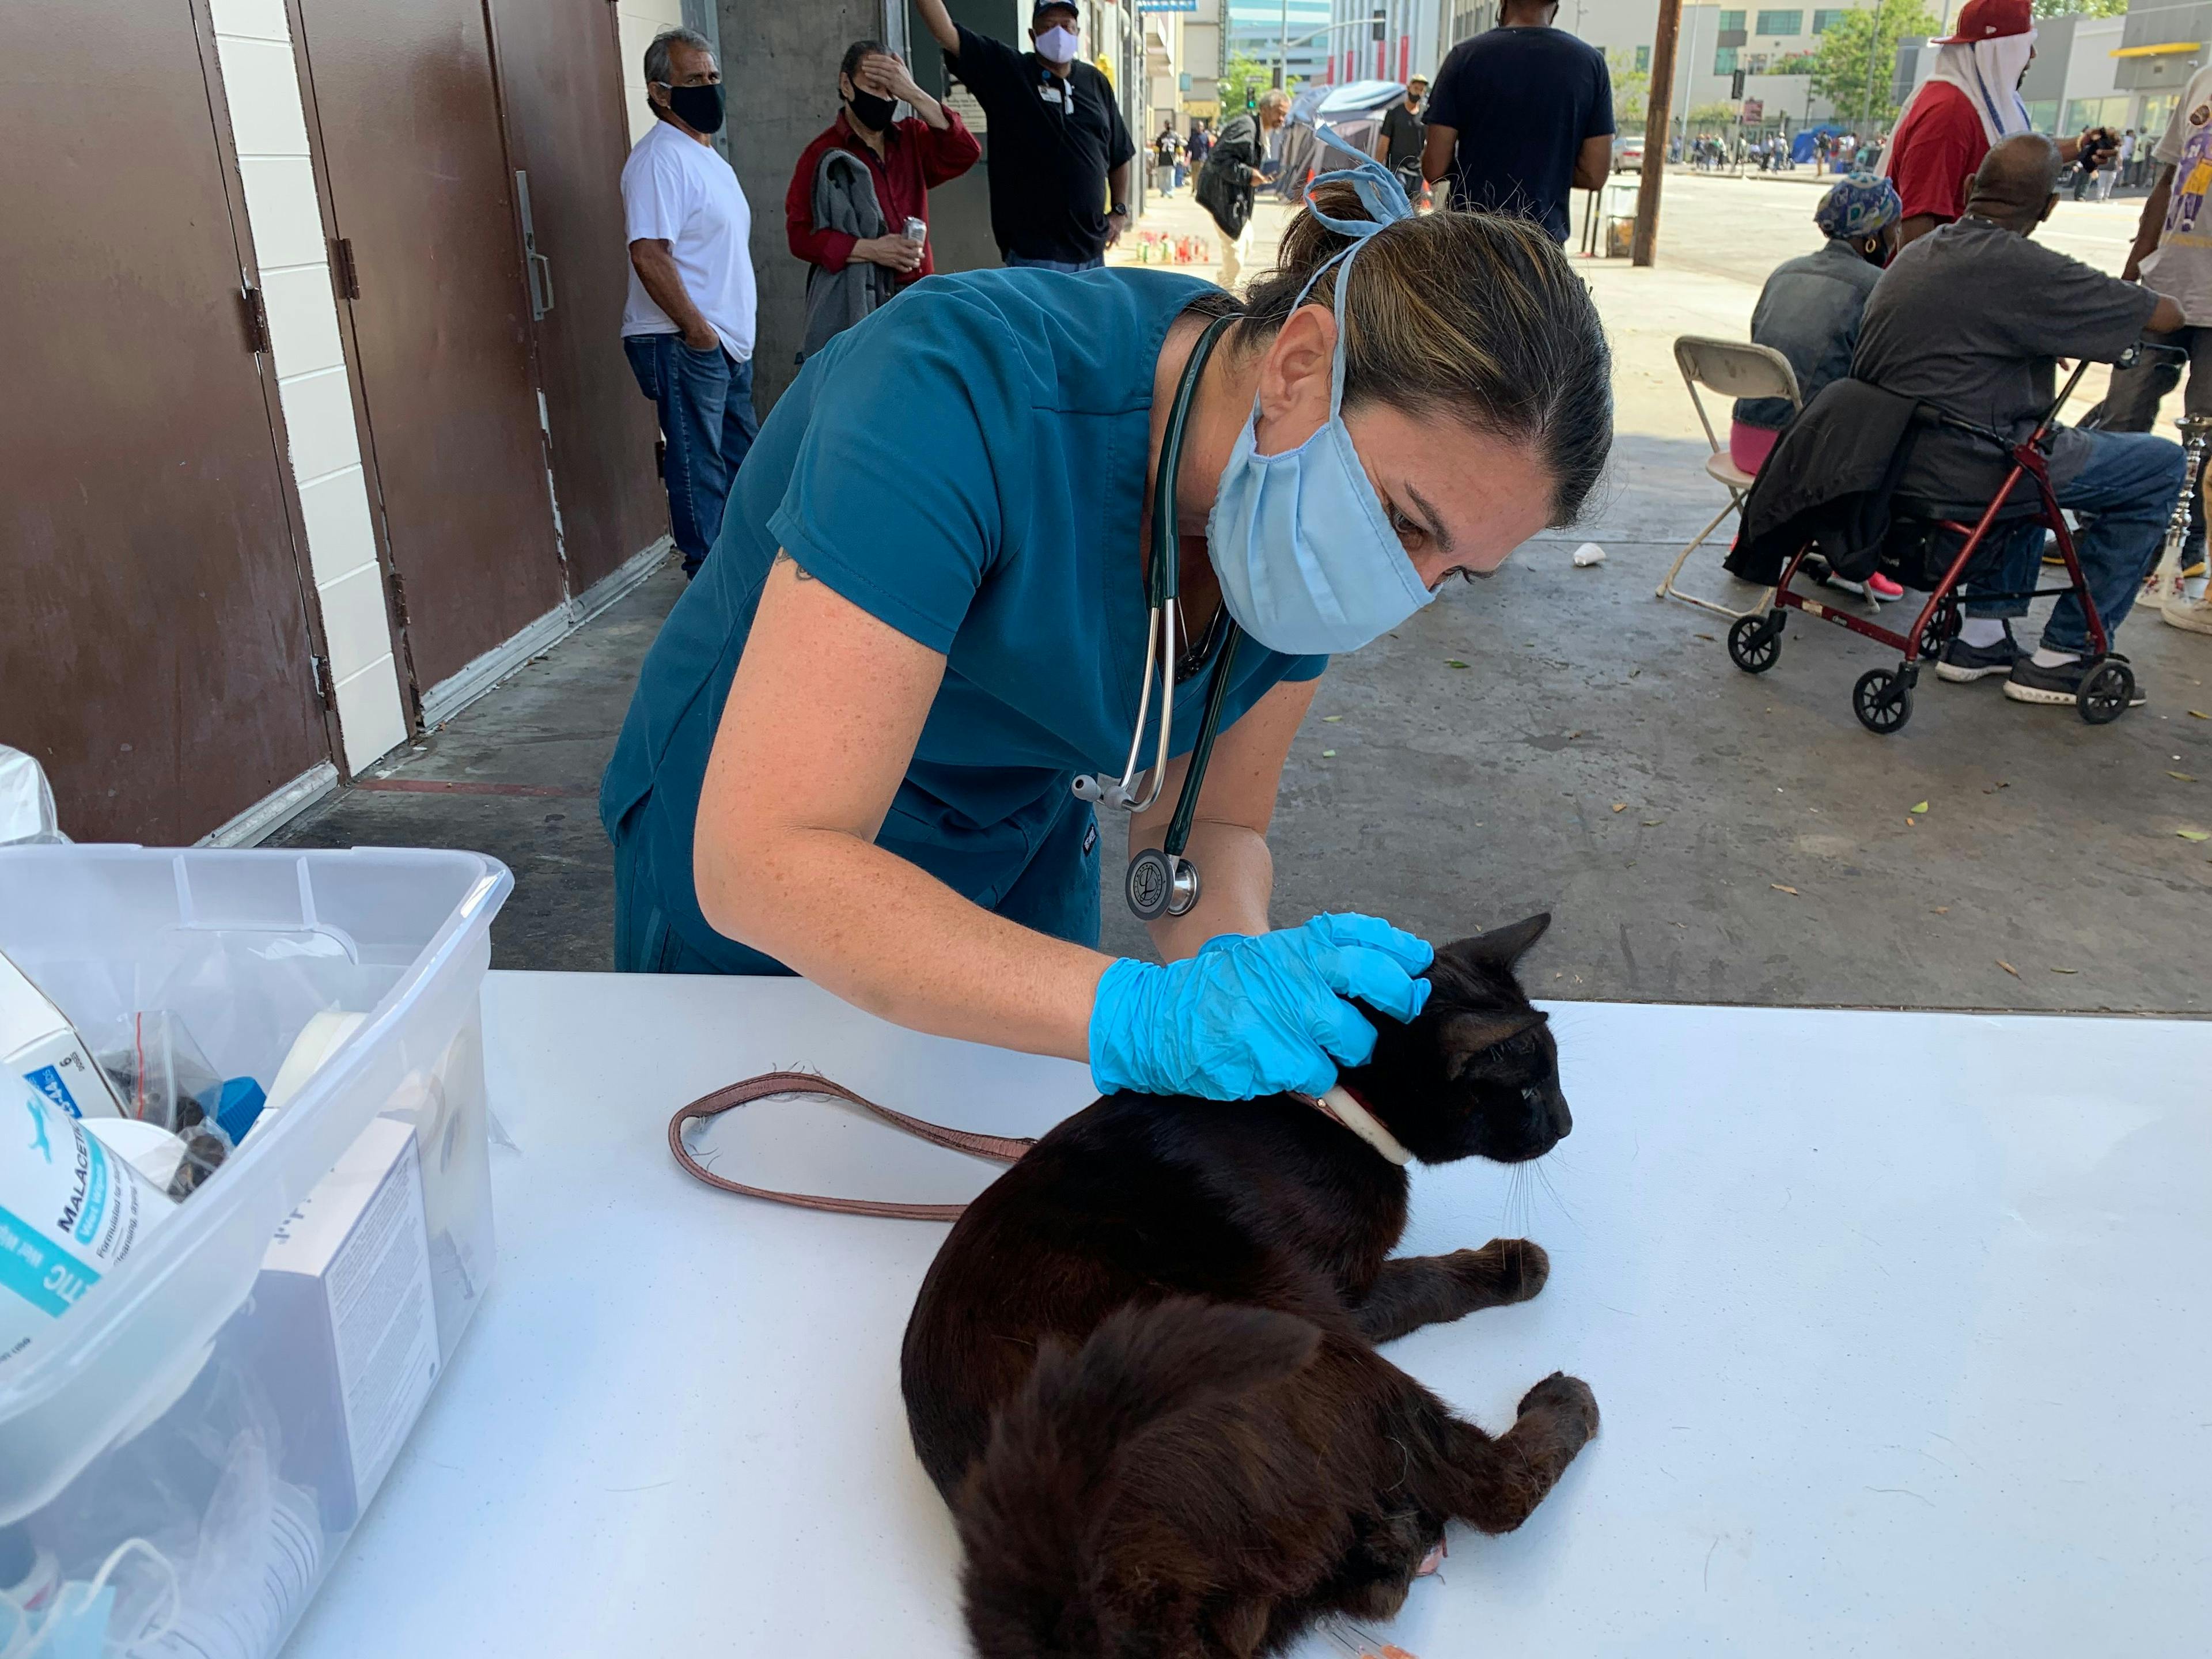 ElleVet kicks off second mobile relief tour expanding free veterinary care